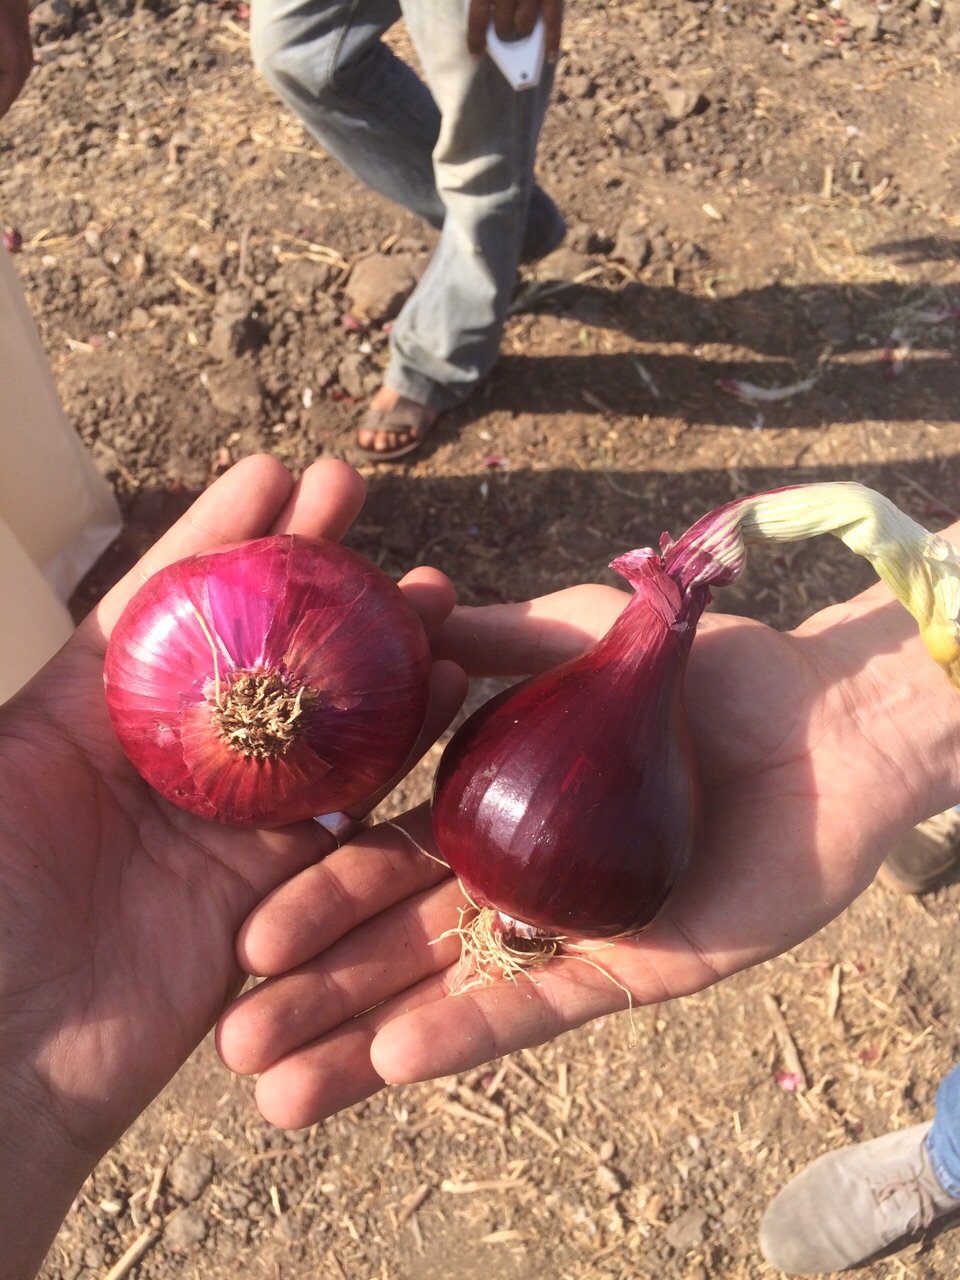 Fresh onions link